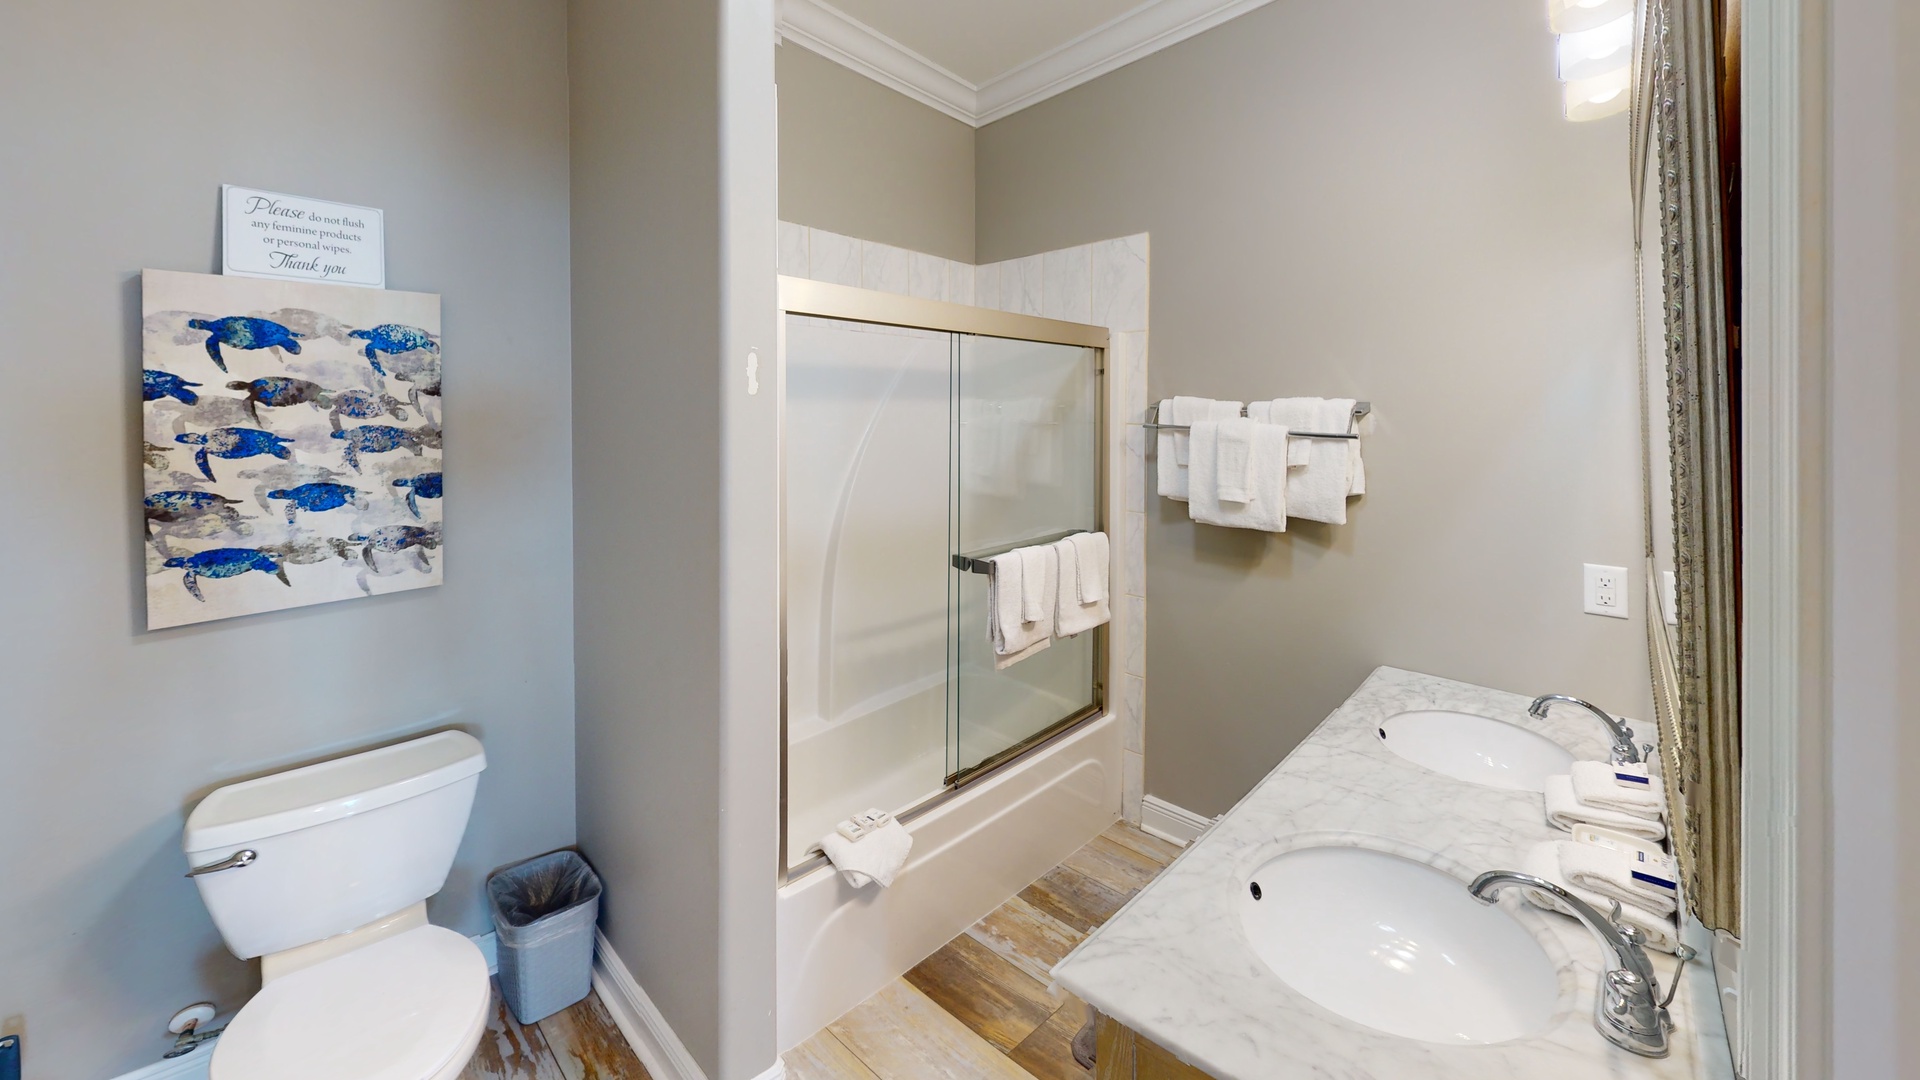 hal2nd floor hall bathroom with a tub/shower combo